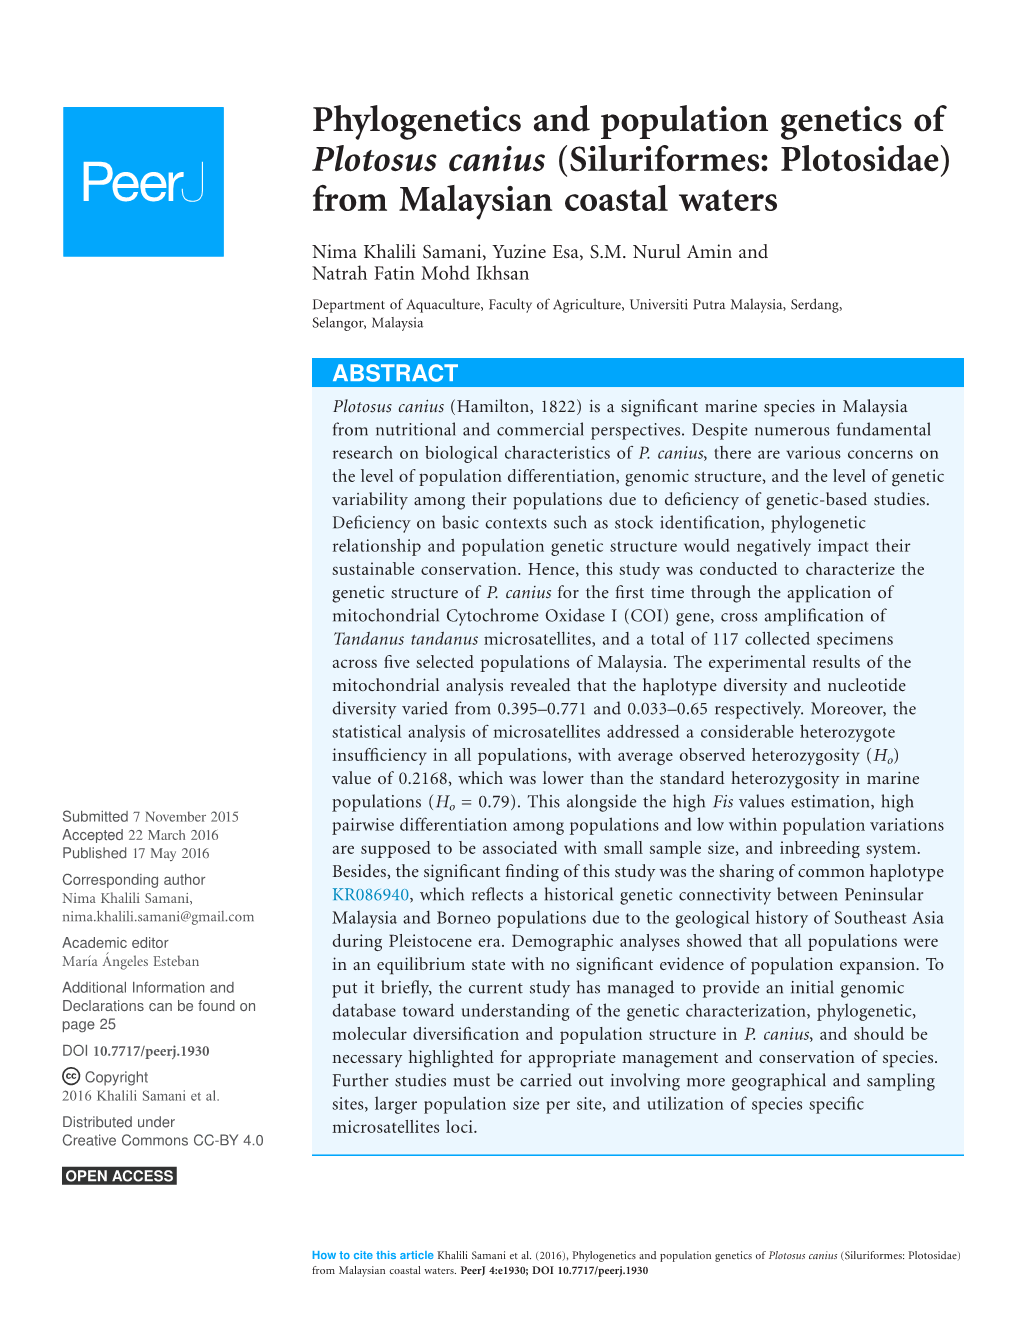 Phylogenetics and Population Genetics of Plotosus Canius (Siluriformes: Plotosidae) from Malaysian Coastal Waters